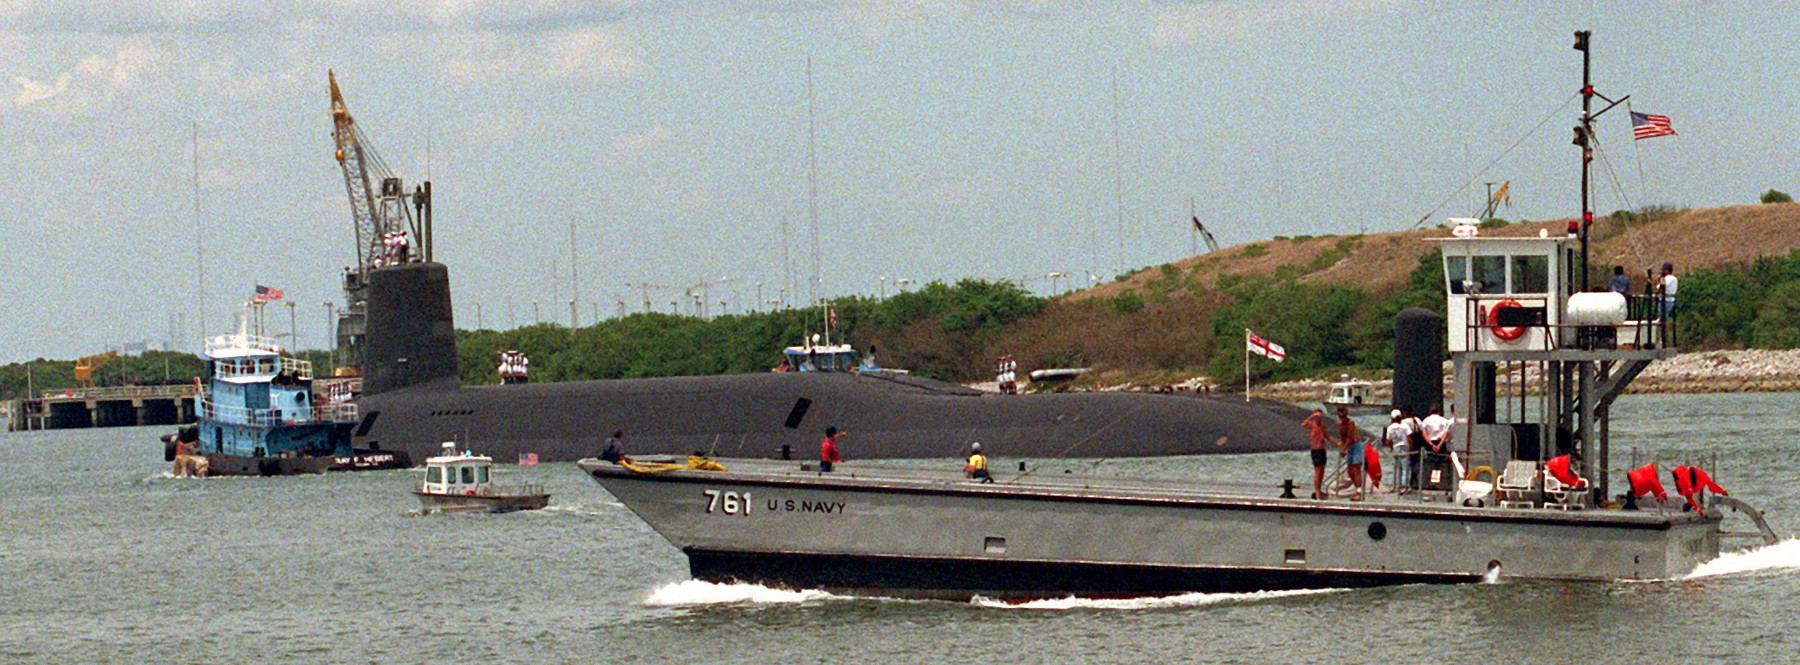 s28 hms vanguard ssbn ballistic missile submarine royal navy 06